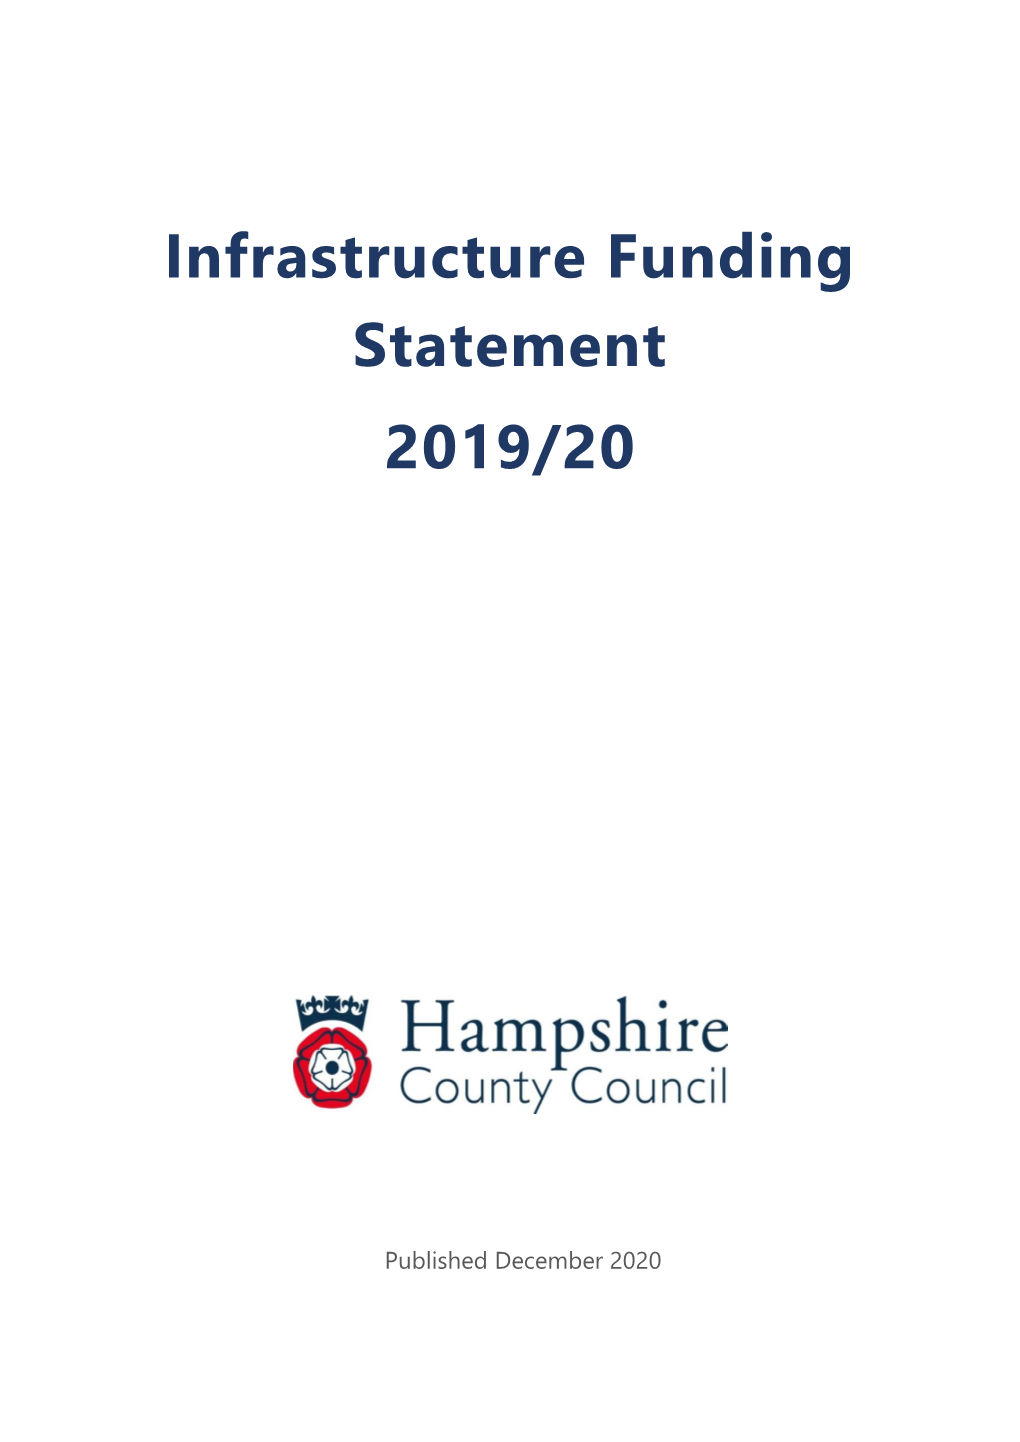 Infrastructure Funding Statement 2019/20